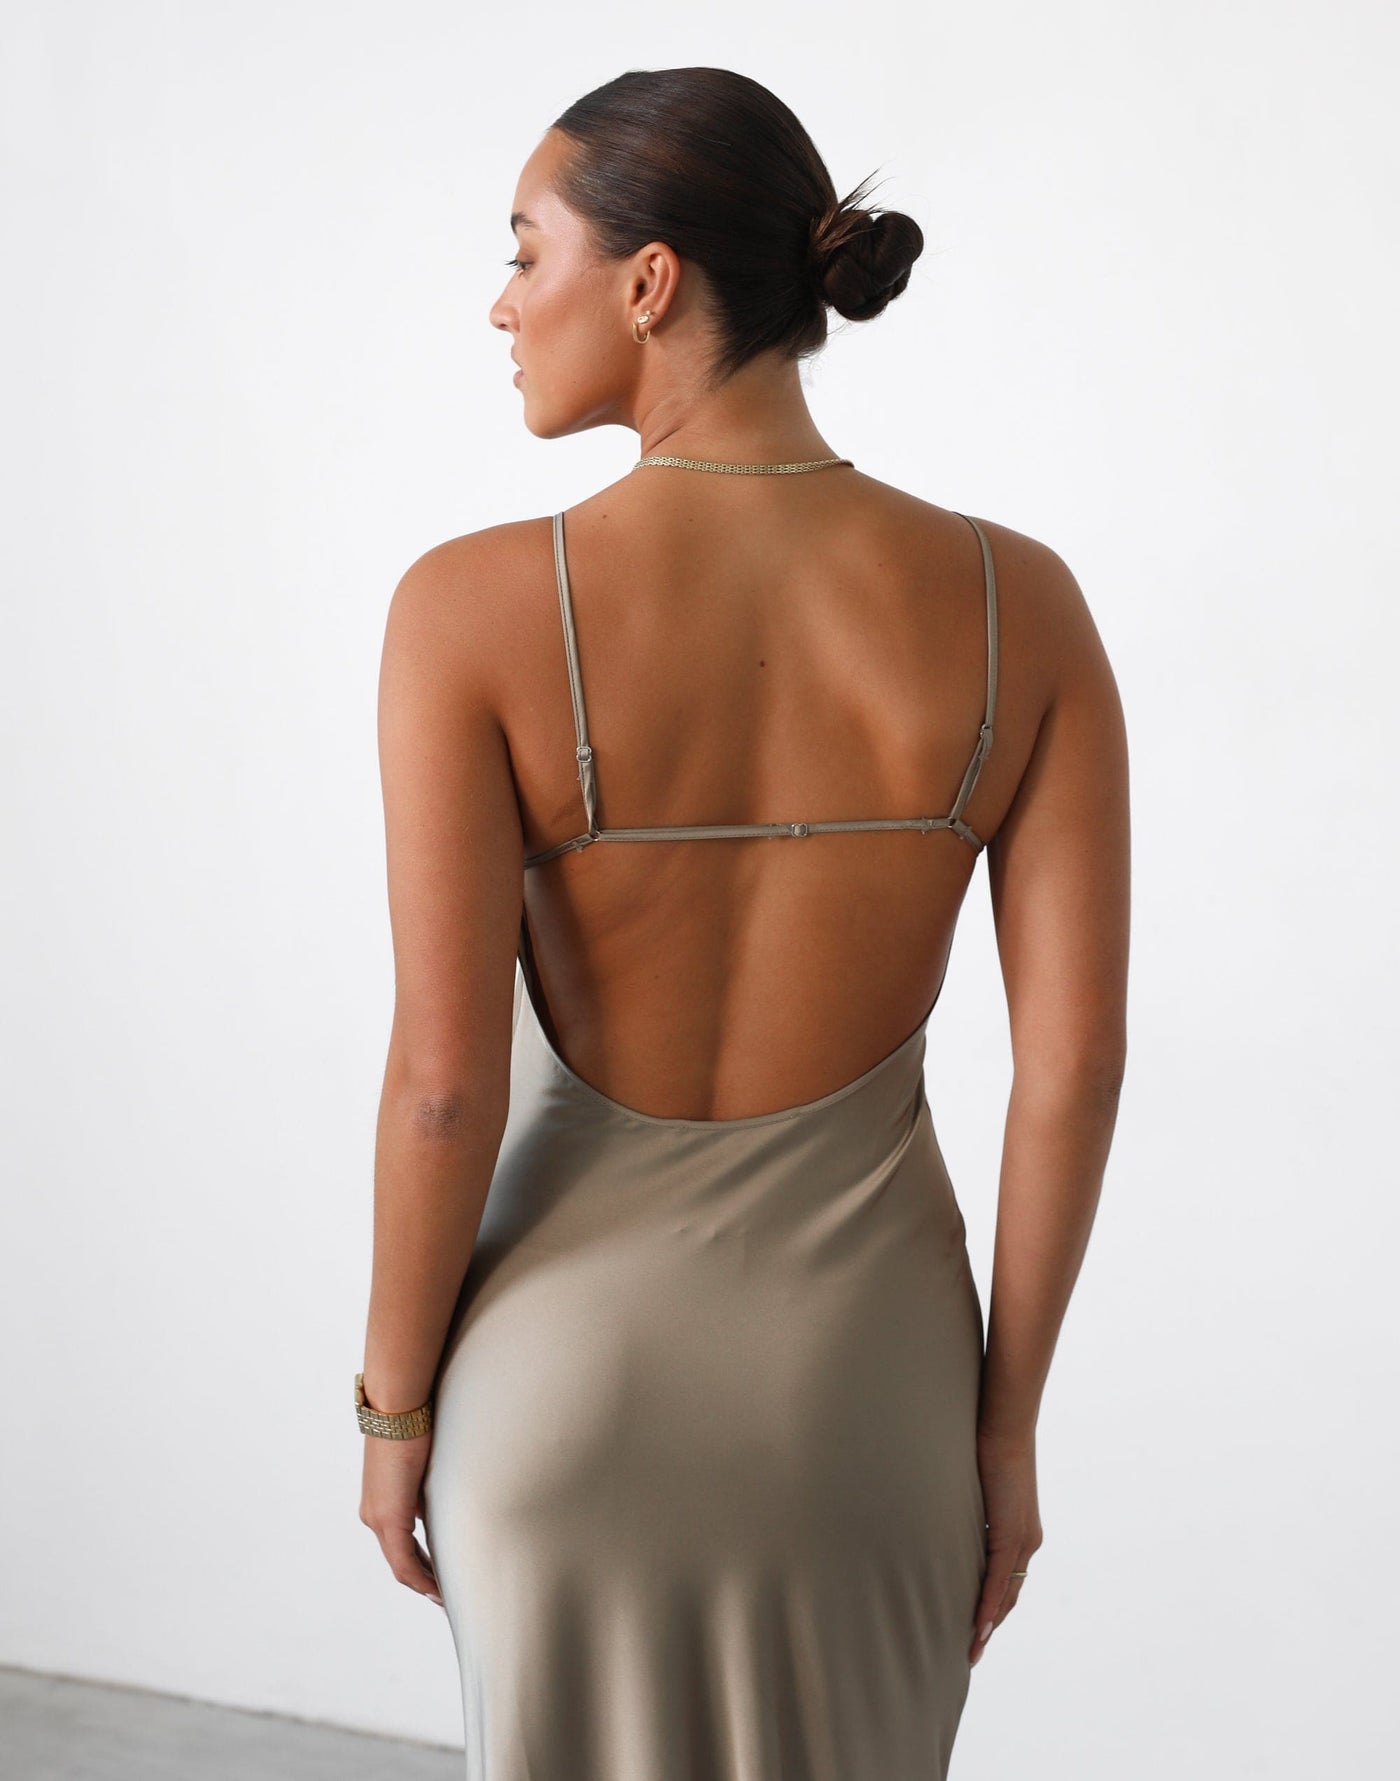 Juliette Satin Dress (Mineral) - By Lioness - Open Back Maxi Dress - Women's Dress - Charcoal Clothing